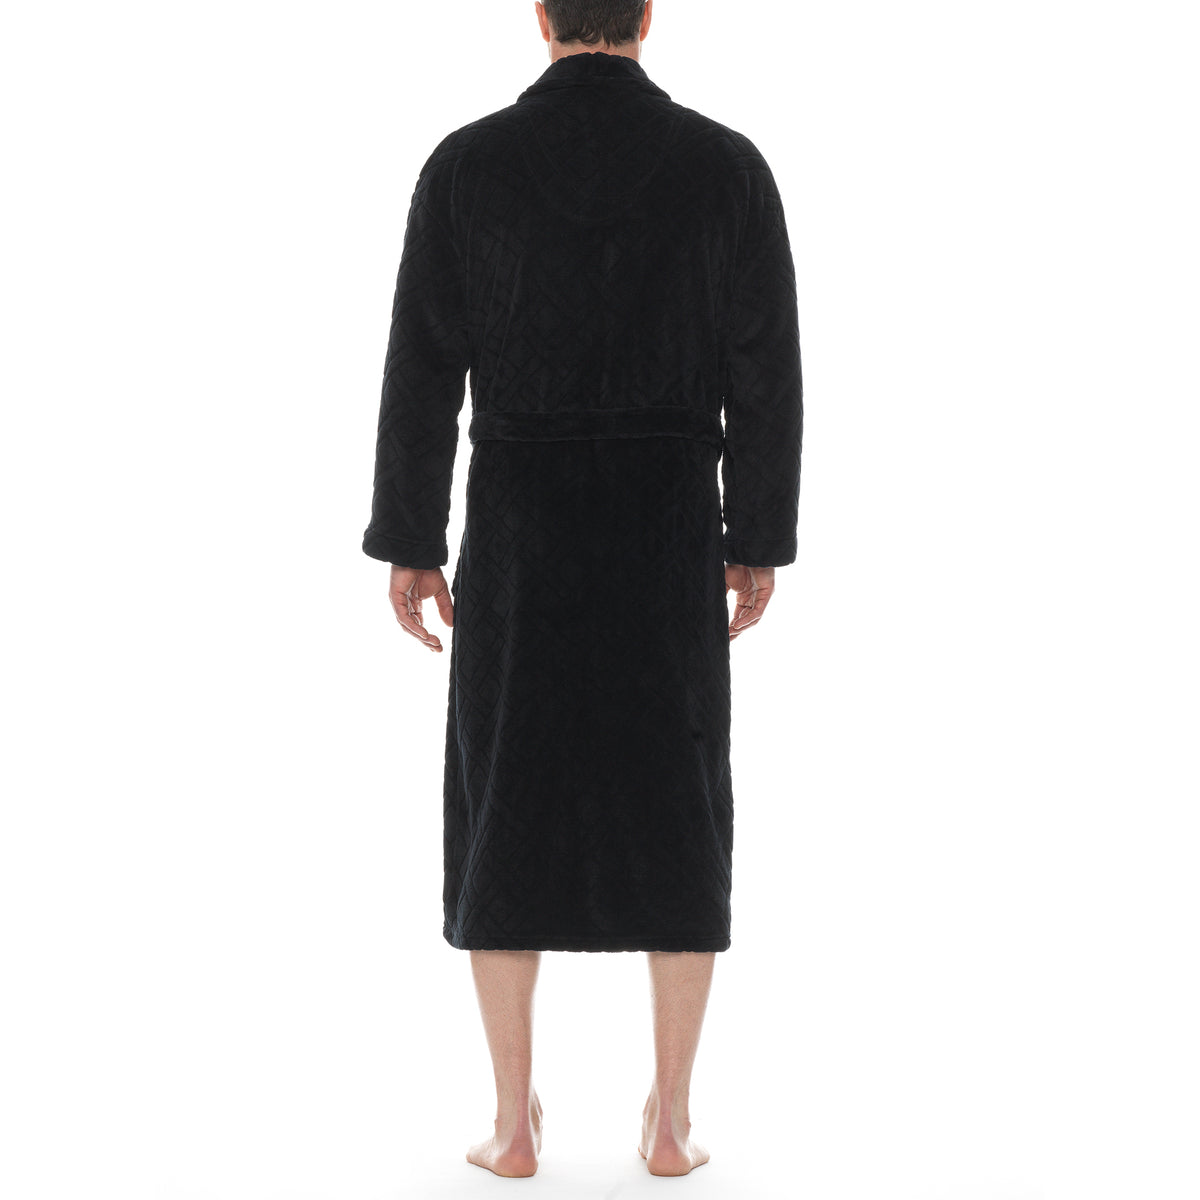 Crossroads Plush Shawl robe